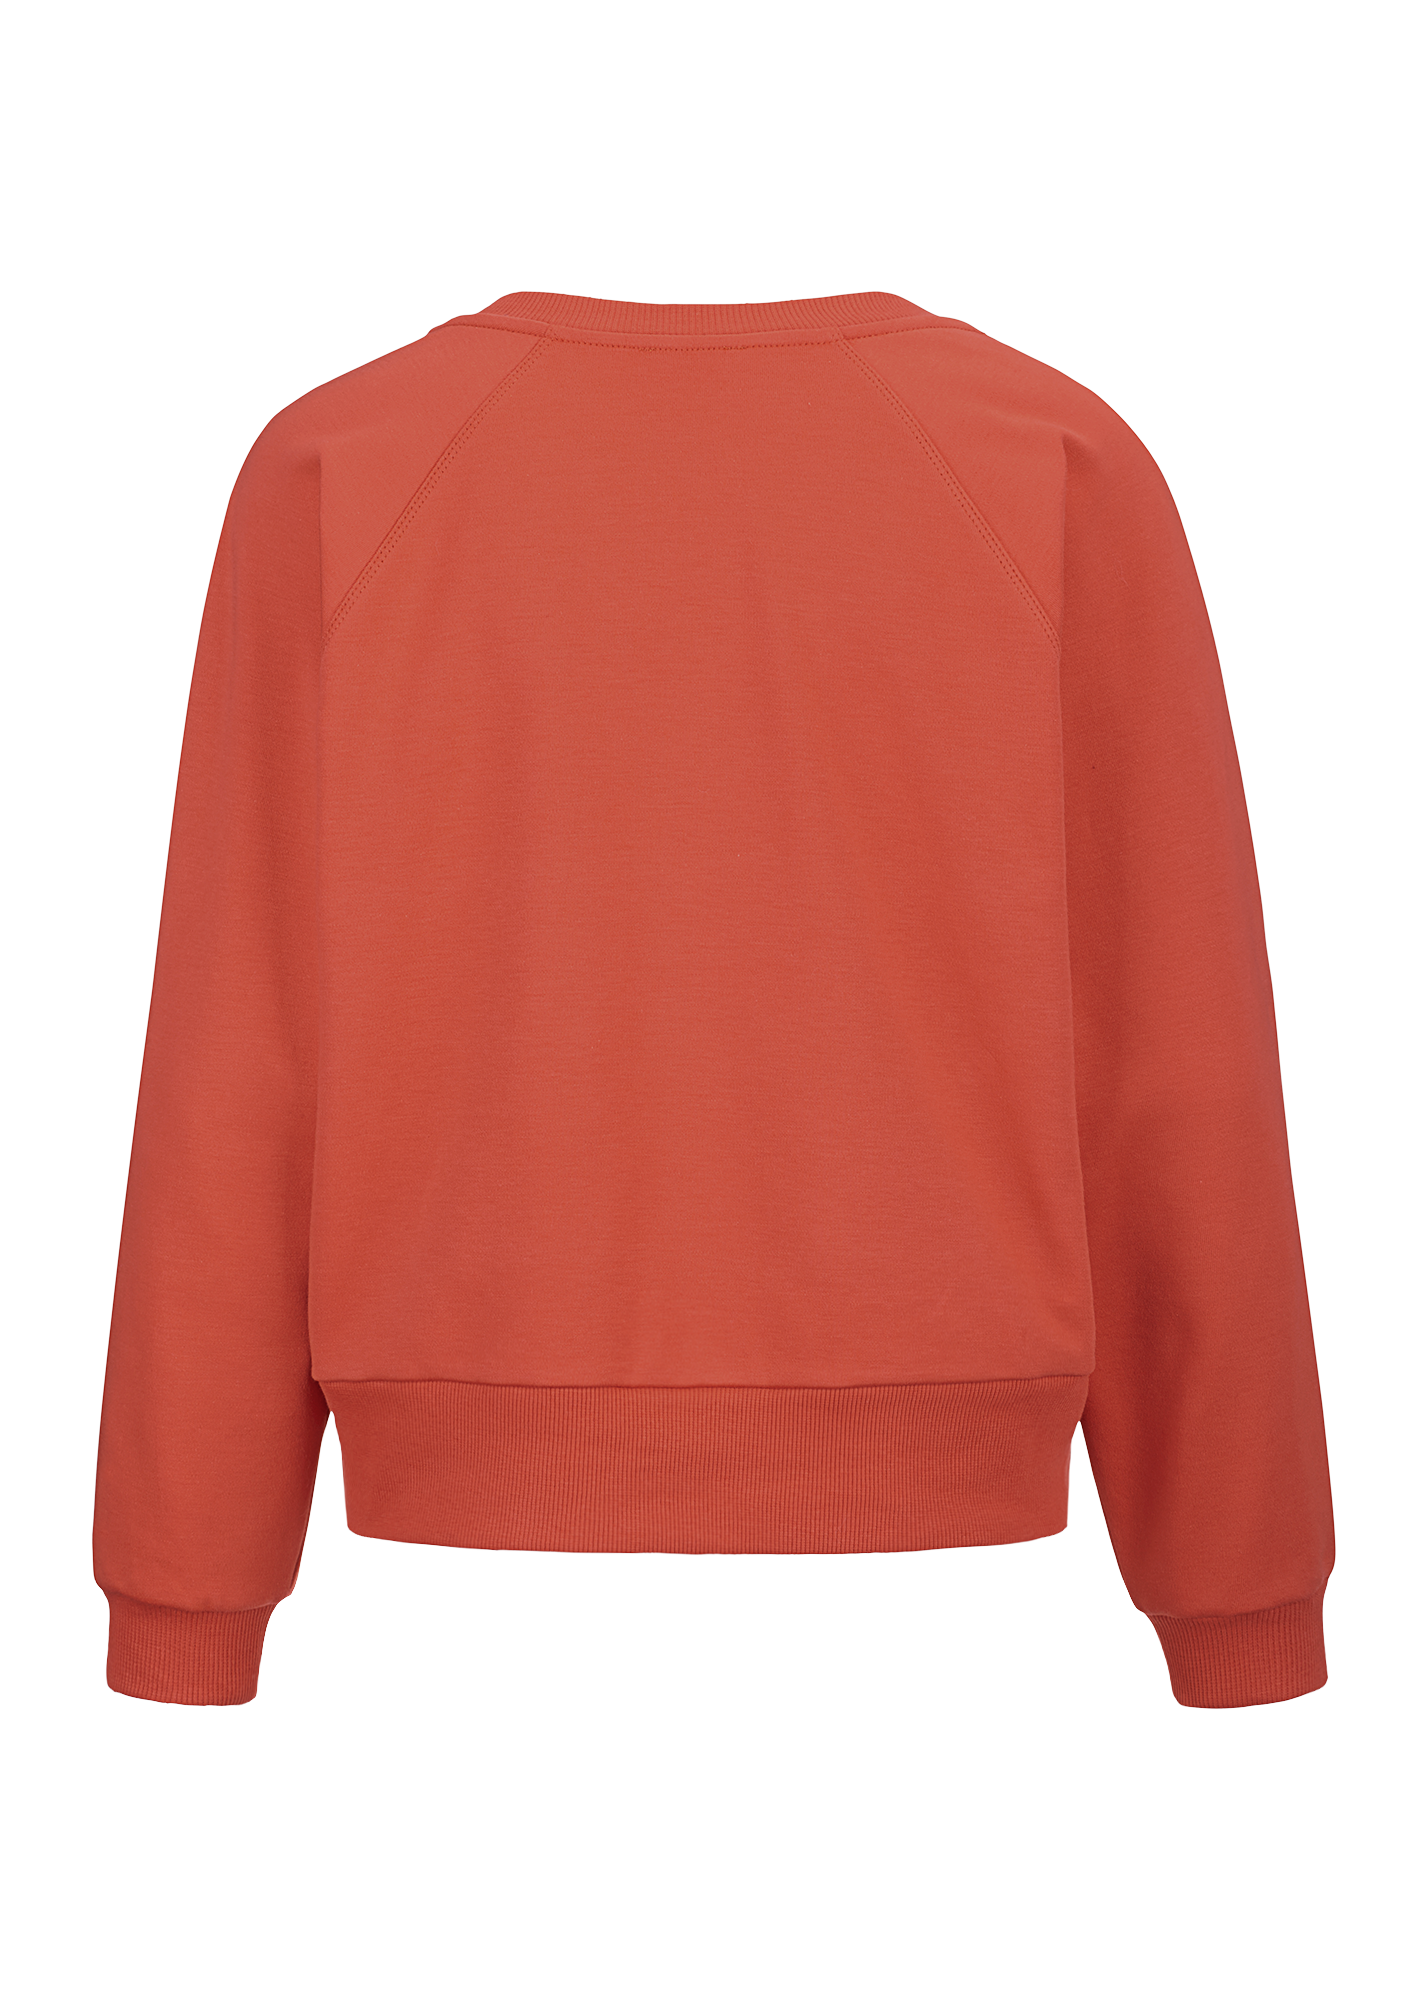 RIANI-outlet-sale-Jersey sweatshirt-Sweatshirt-ARCHIVIST